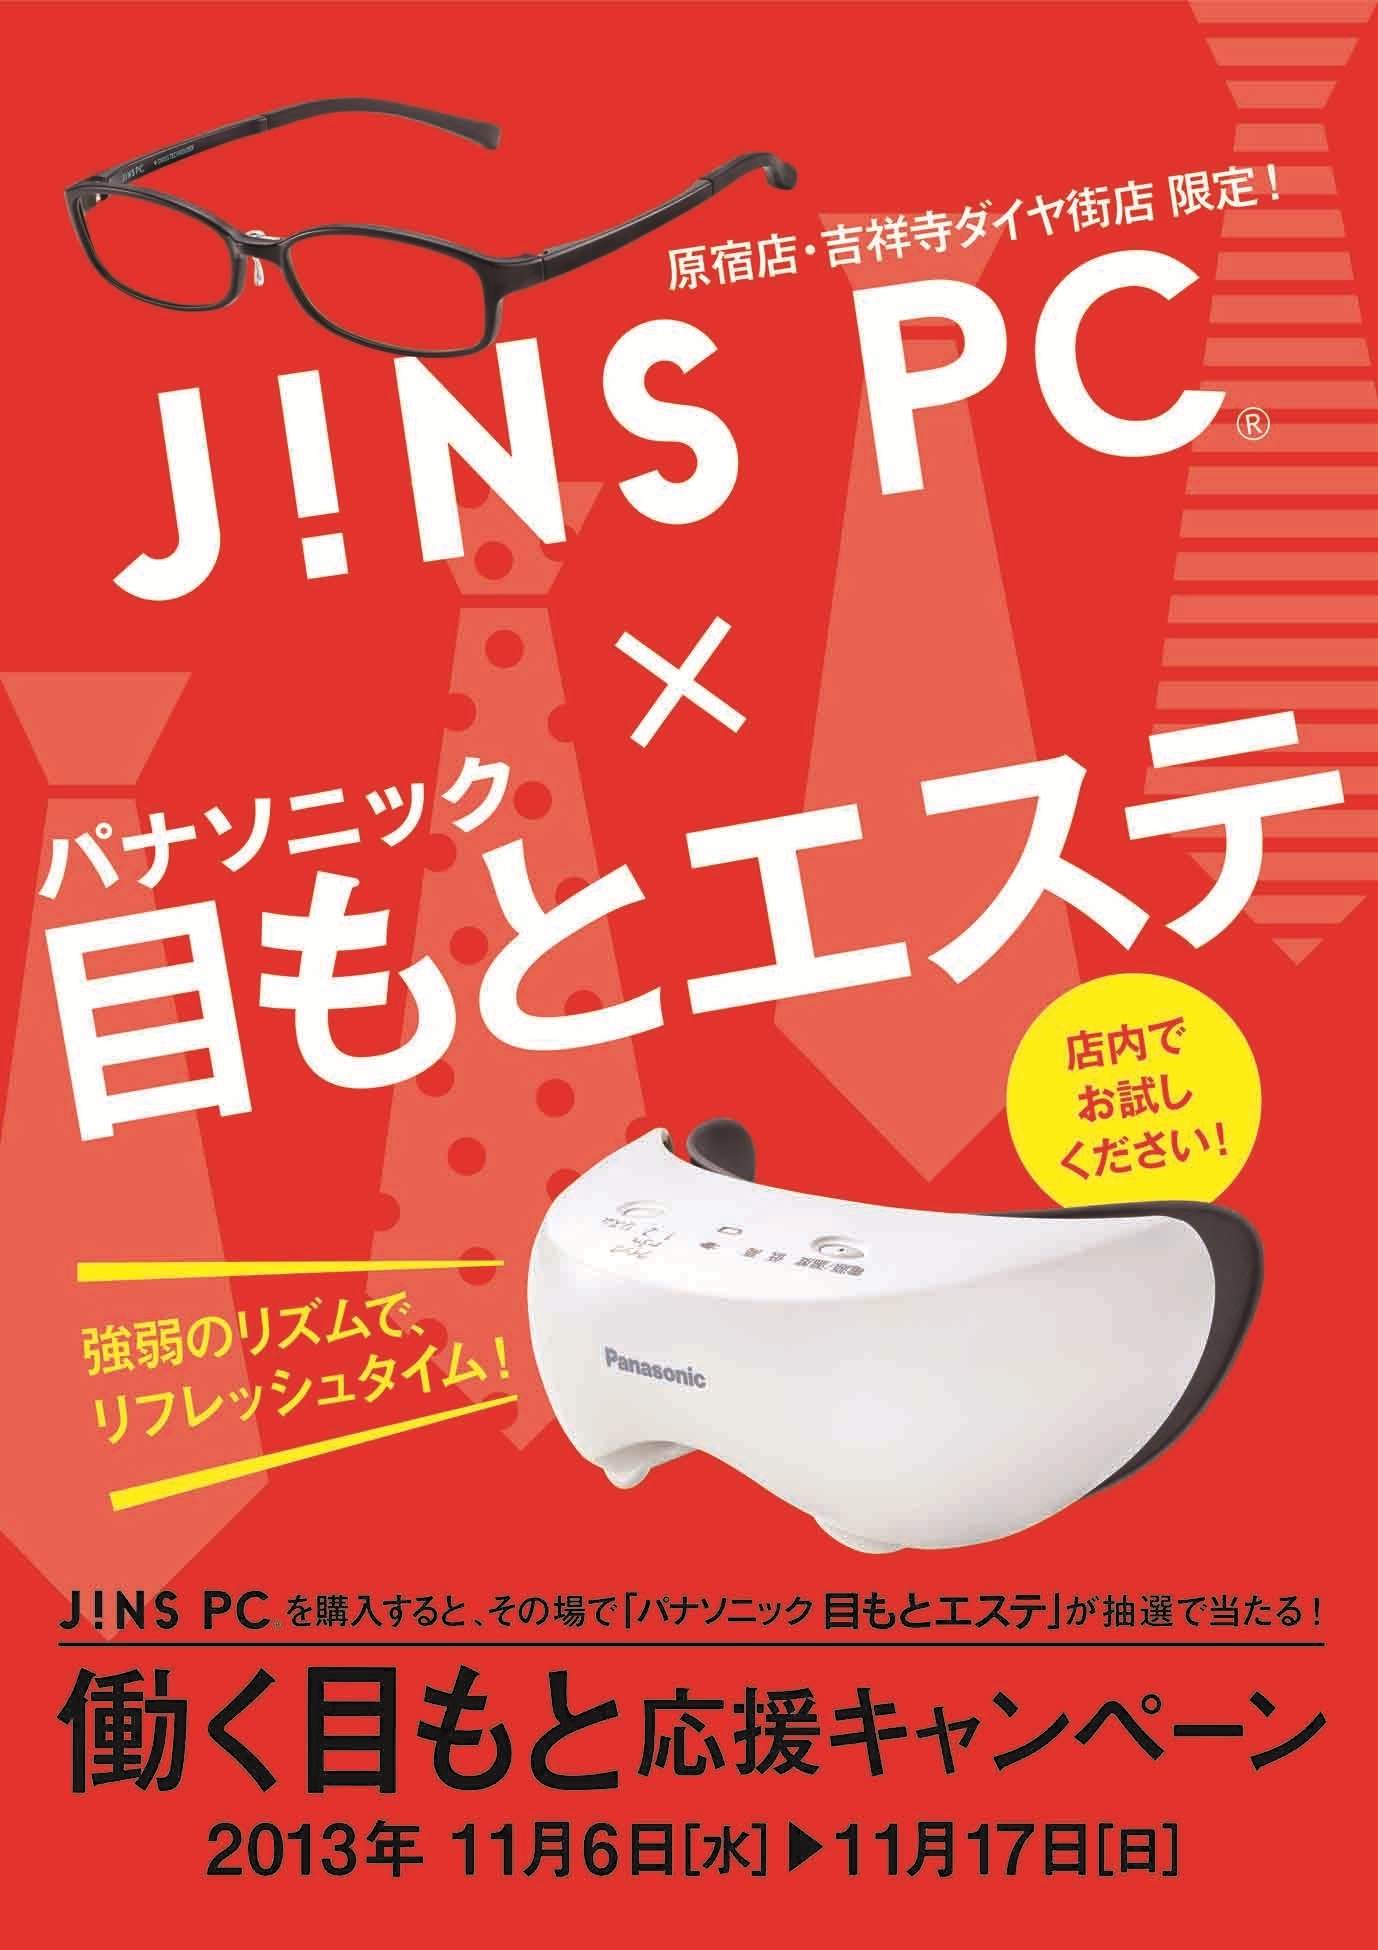 Jins Pc パナソニック 目もとエステ 初のコラボ企画 働く目もと応援キャンペーン を原宿と吉祥寺のjinsショップで開催 トピックス Panasonic Newsroom Japan パナソニック ニュースルーム ジャパン